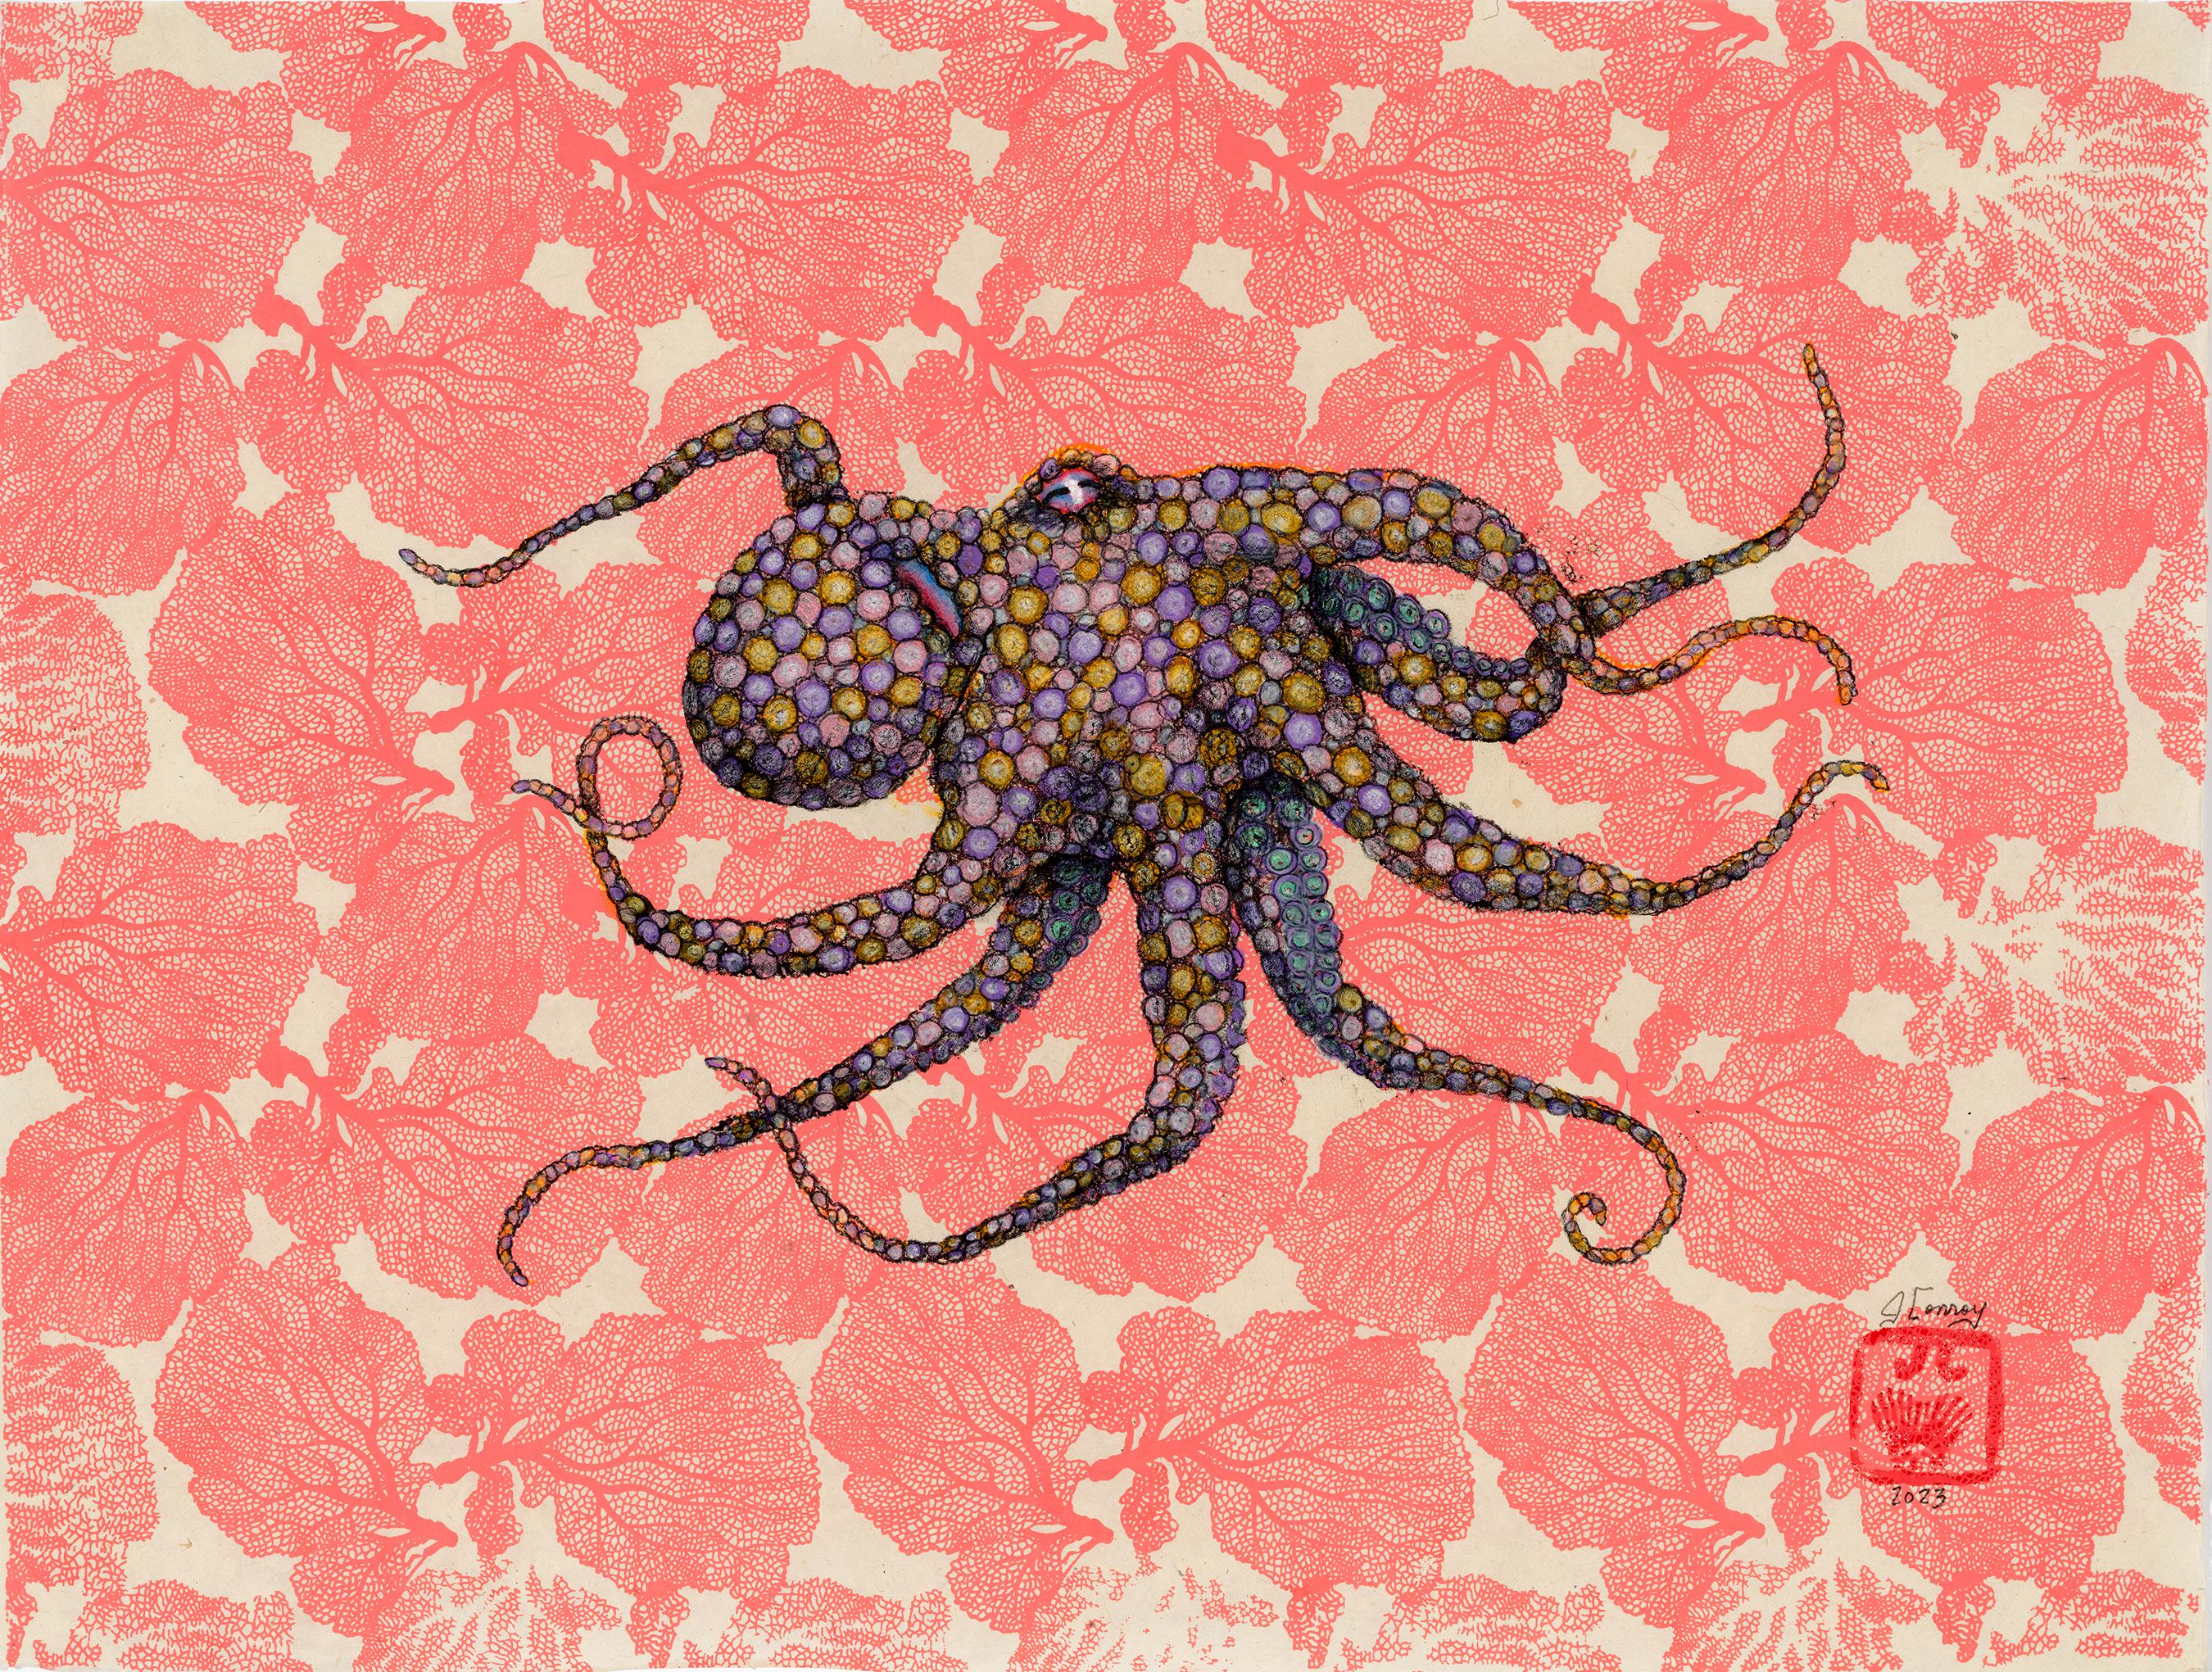 Jeff Conroy Animal Art - Sea Fan - Gumball - Gyotaku Style Sumi Ink Painting of an Octopus